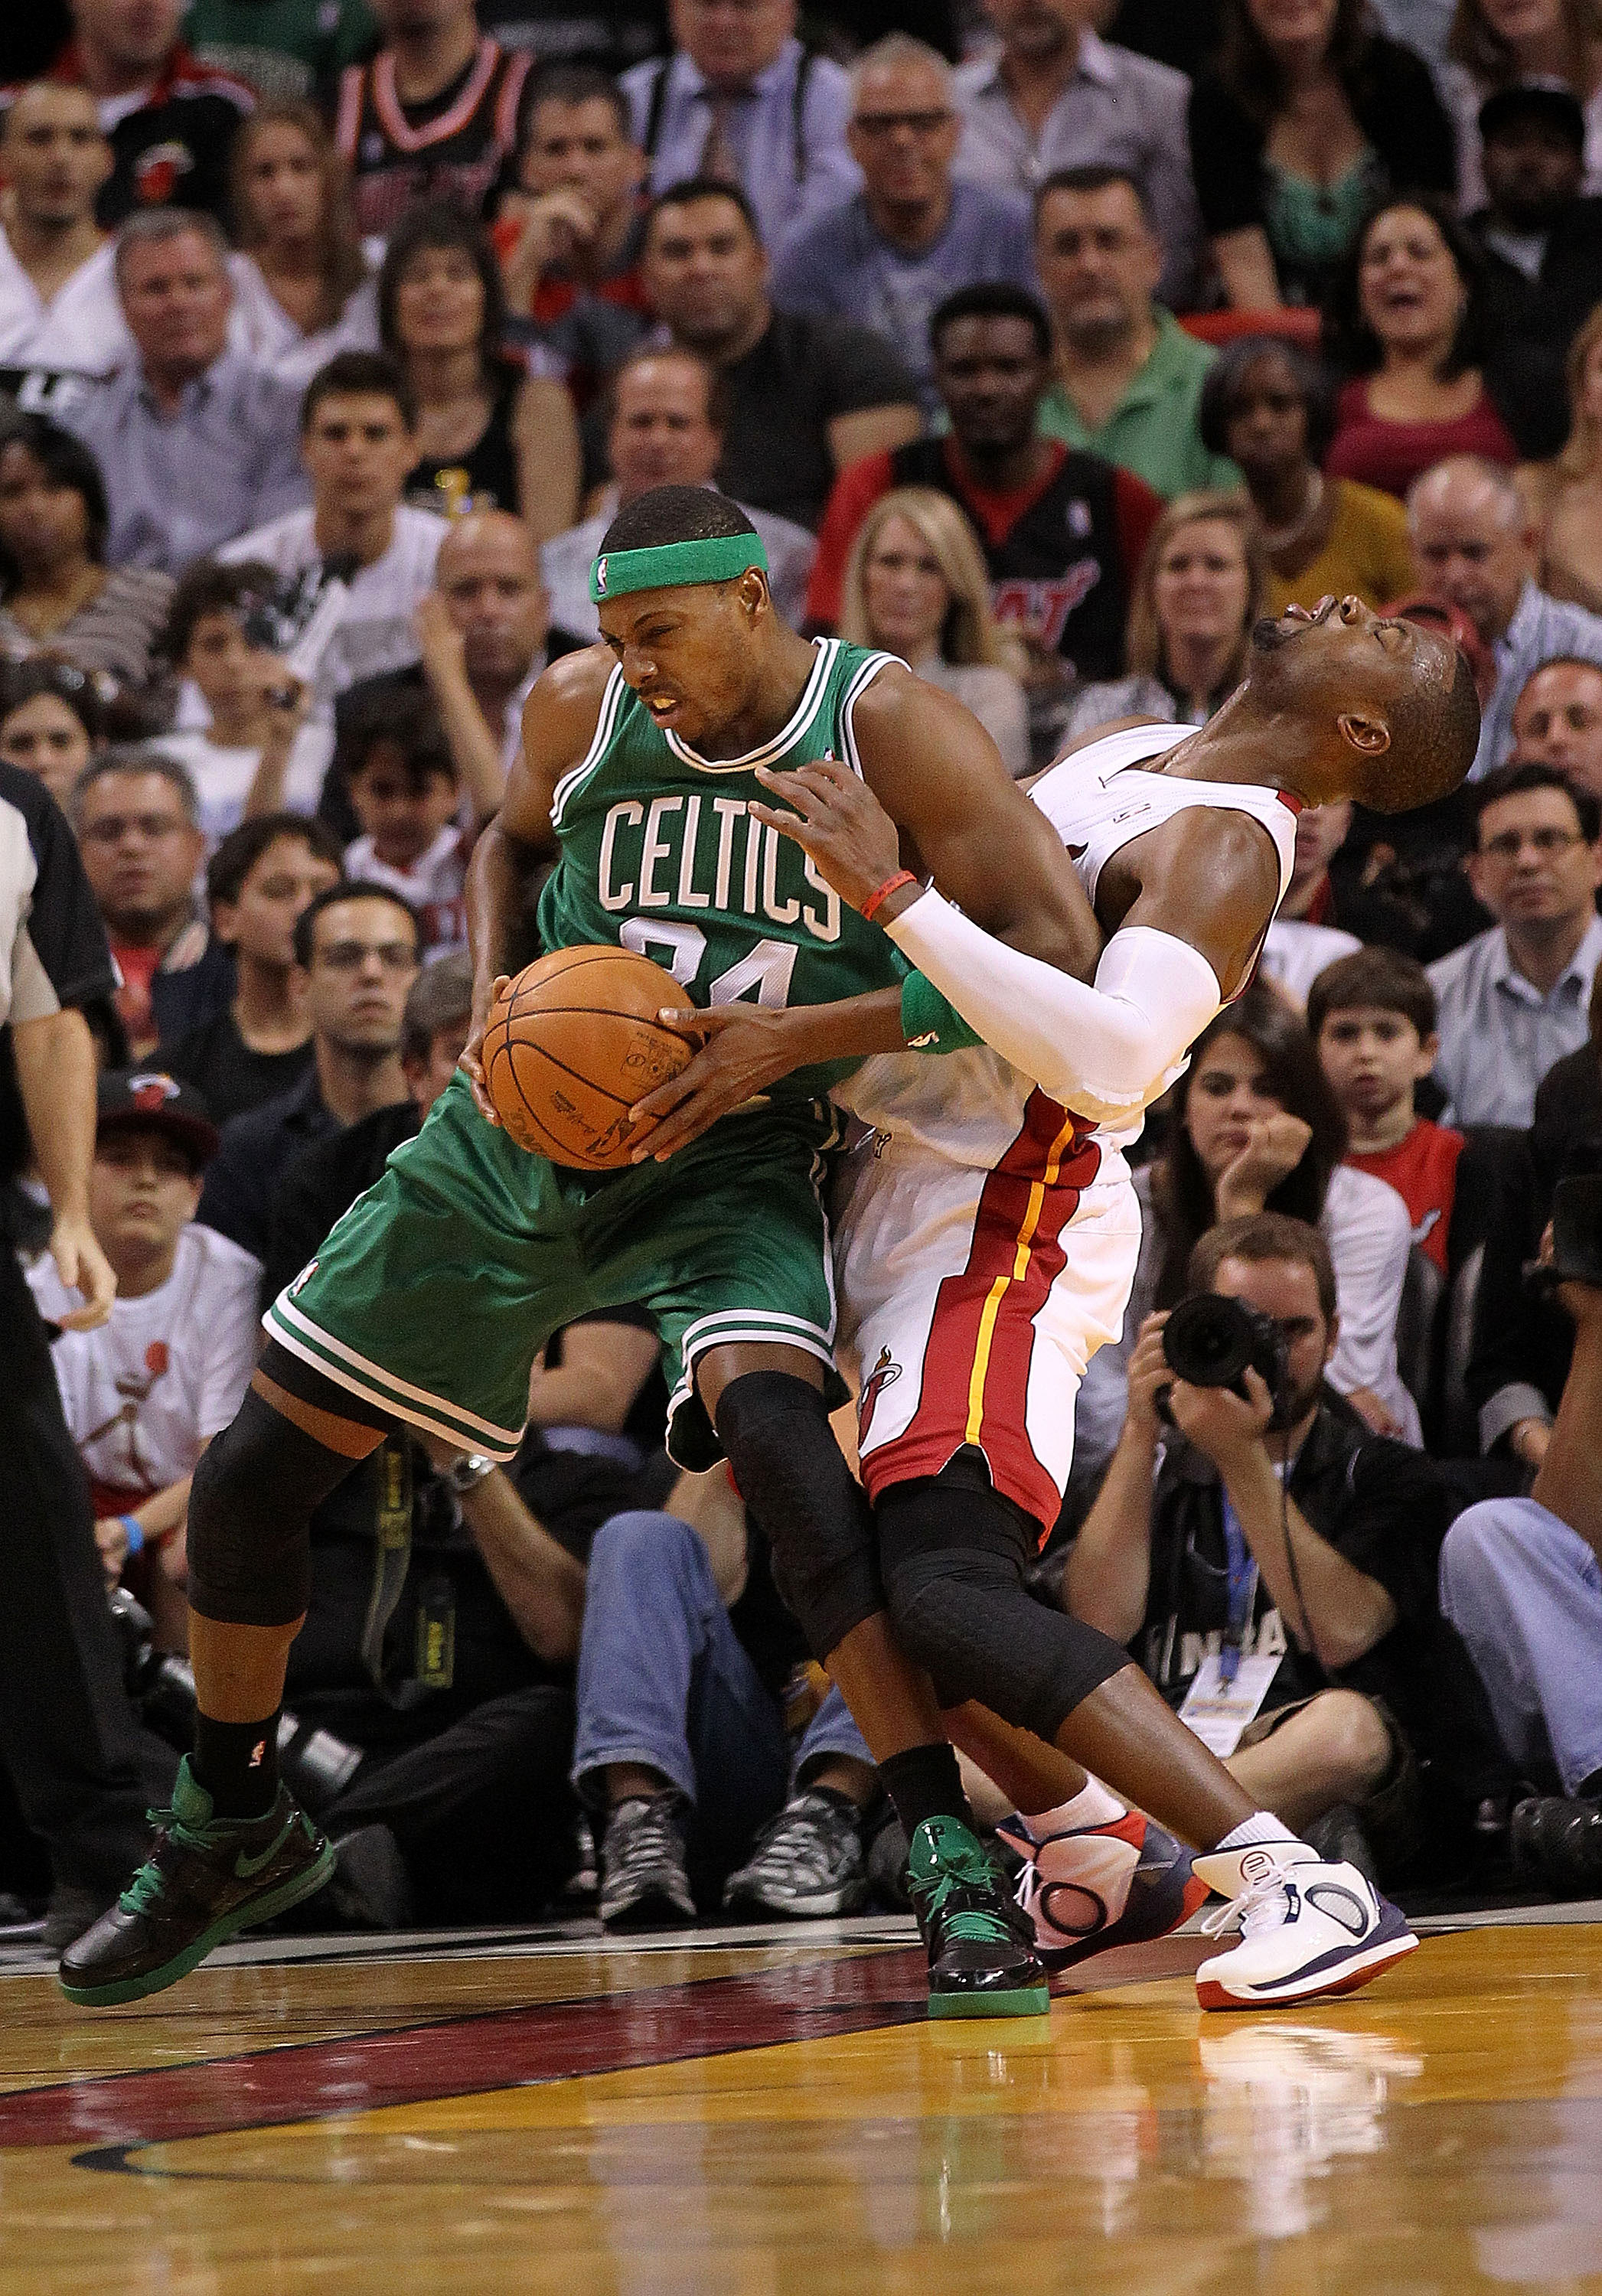 Boston Celtics vs. Miami Heat, NBA Full Game, November 11, 2010